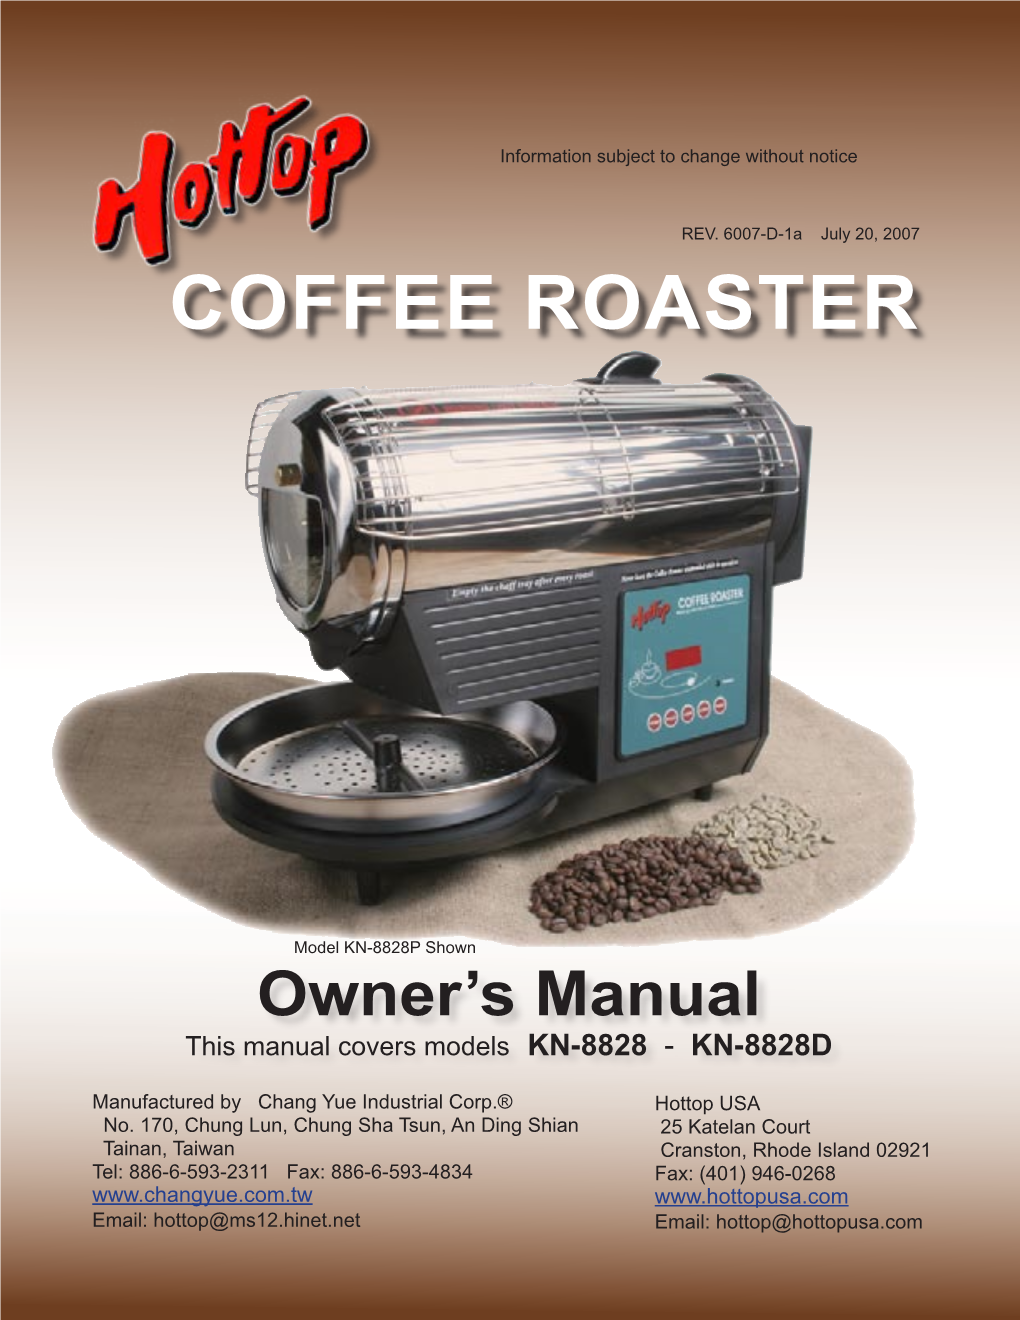 Coffee Roaster